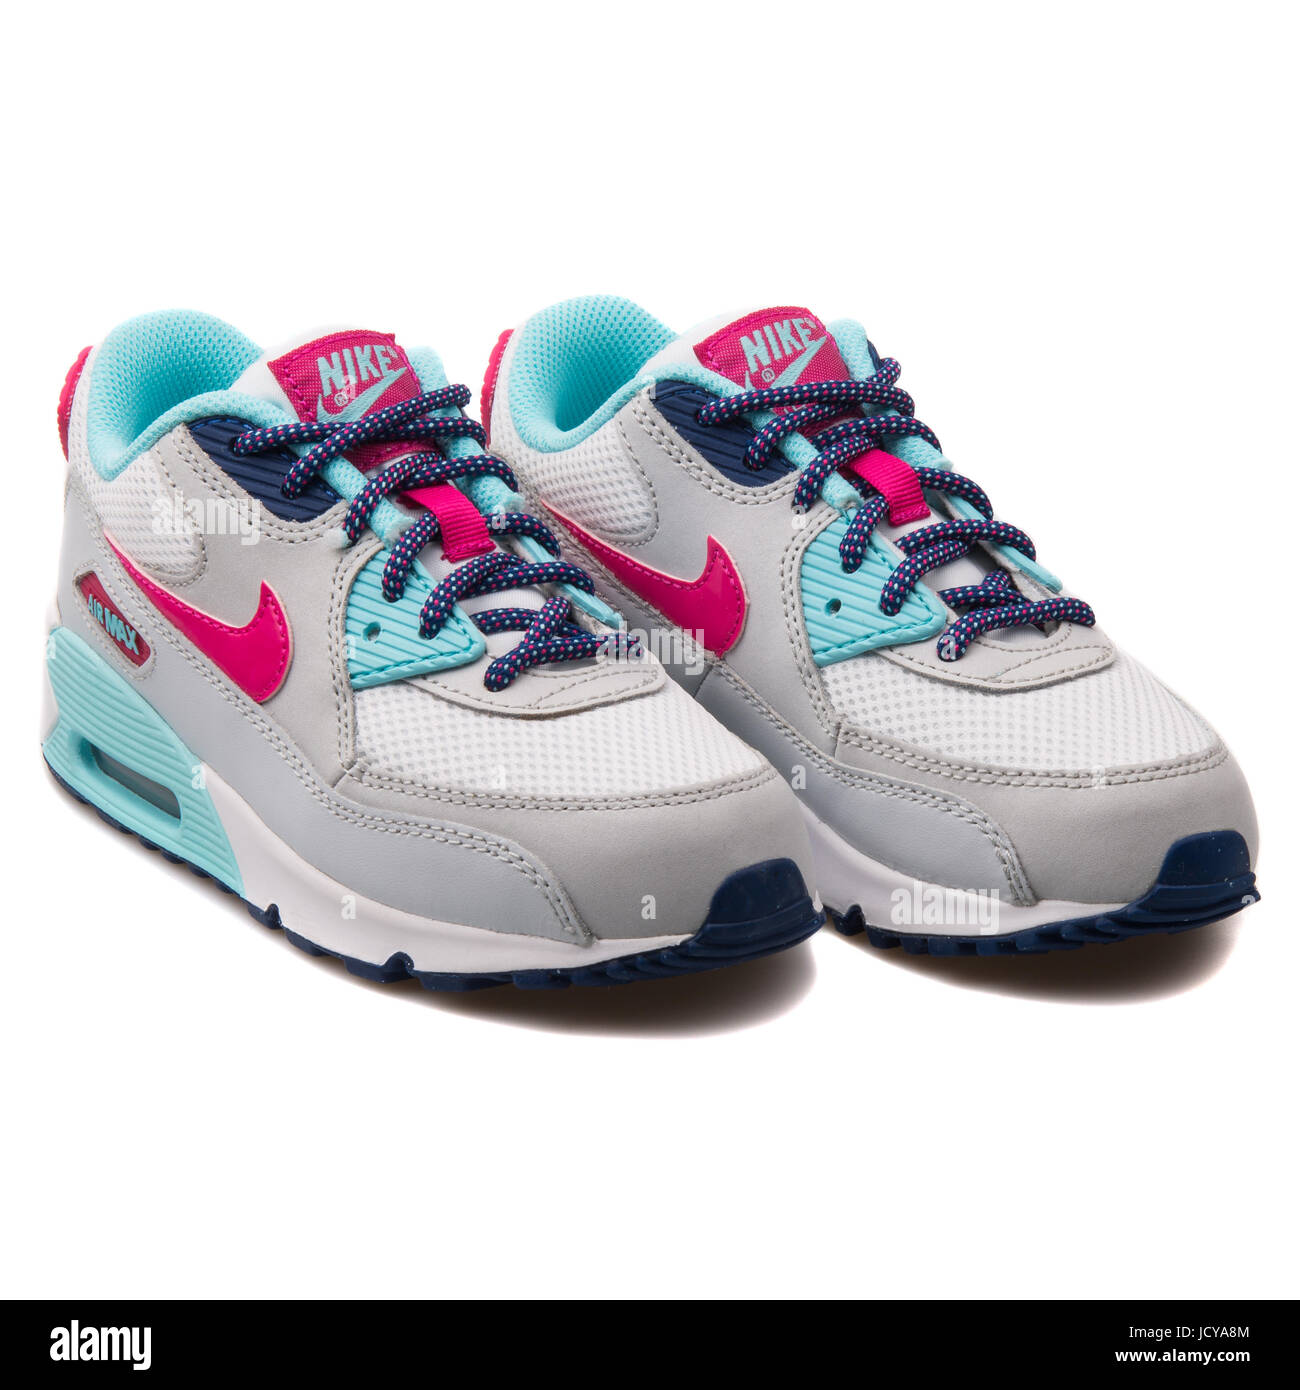 Nike Air Max 90 Mesh (PS) weiß, grau, Pink und Türkis Kinder Laufschuhe -  724856-102 Stockfotografie - Alamy